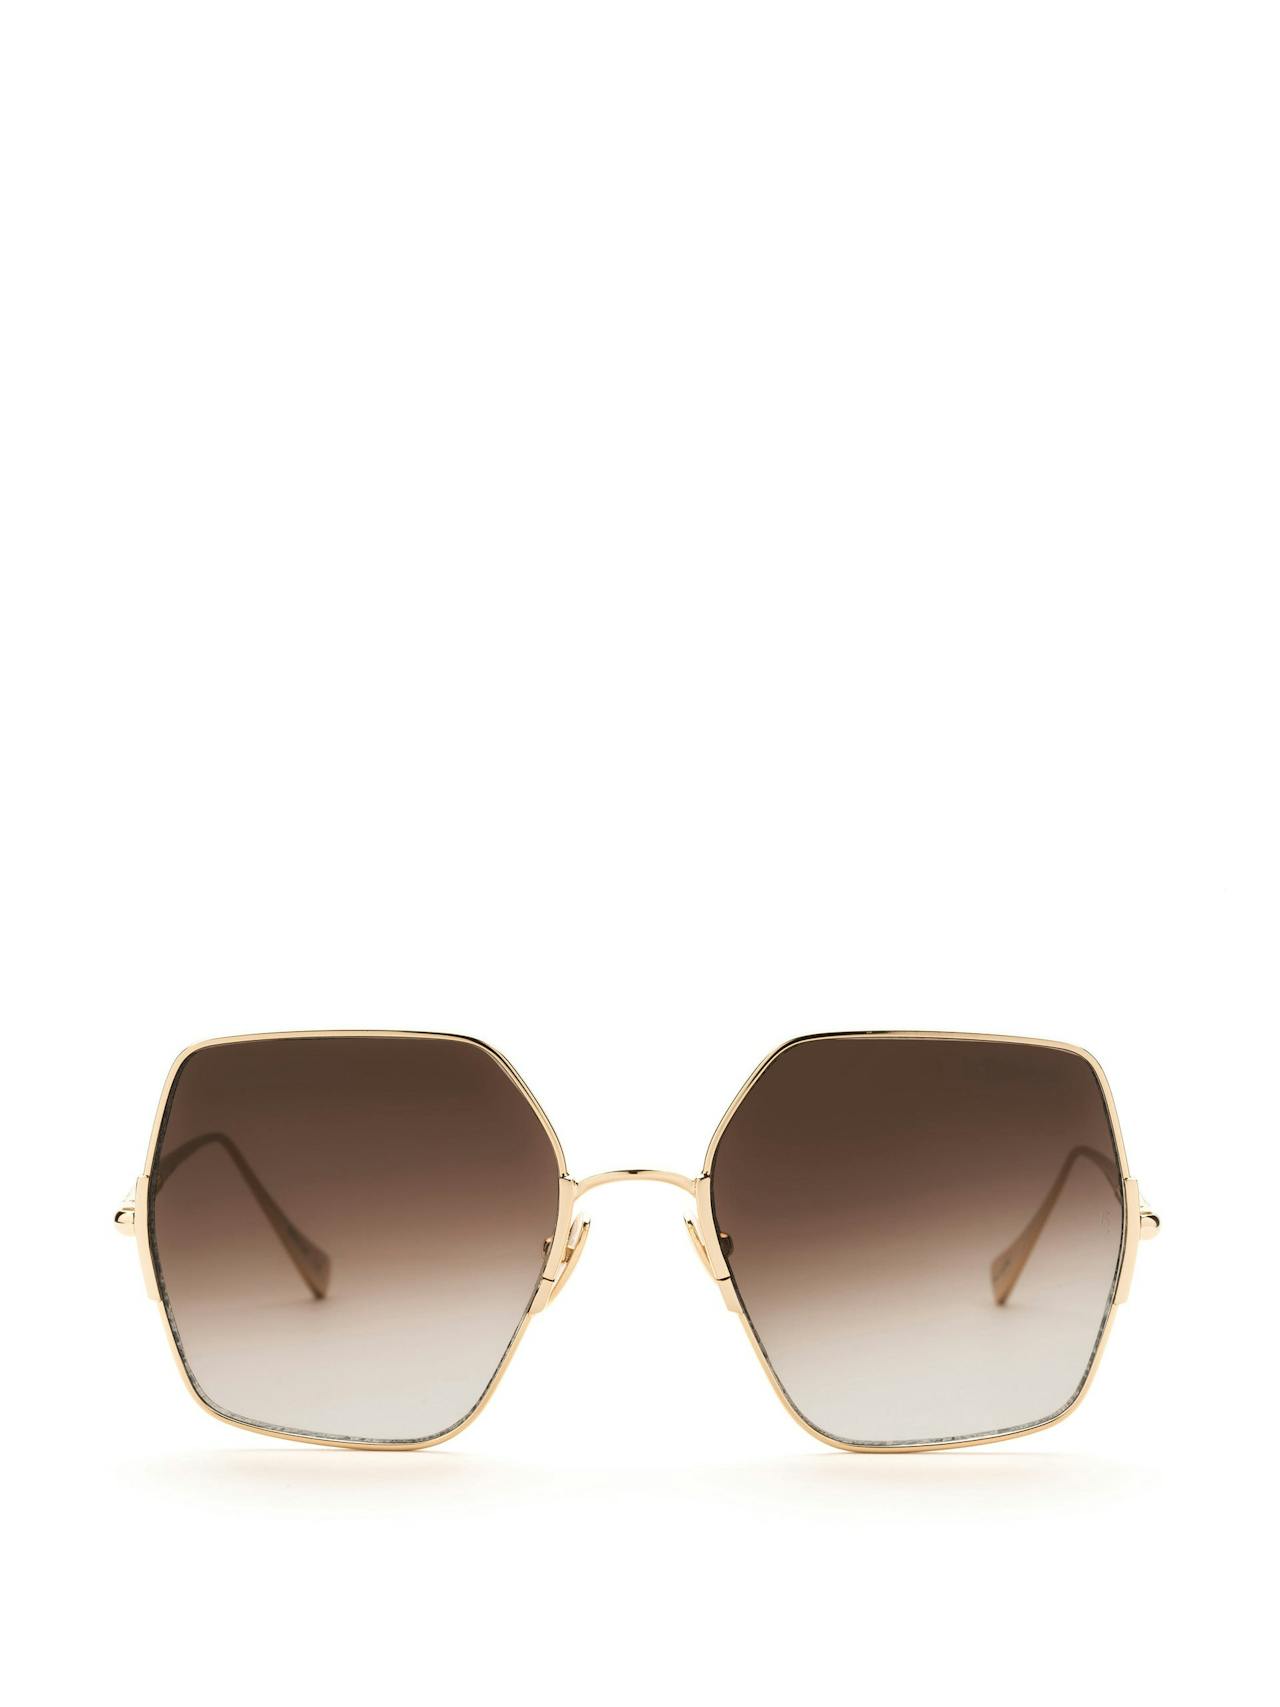 Shiny gold Eden sunglasses